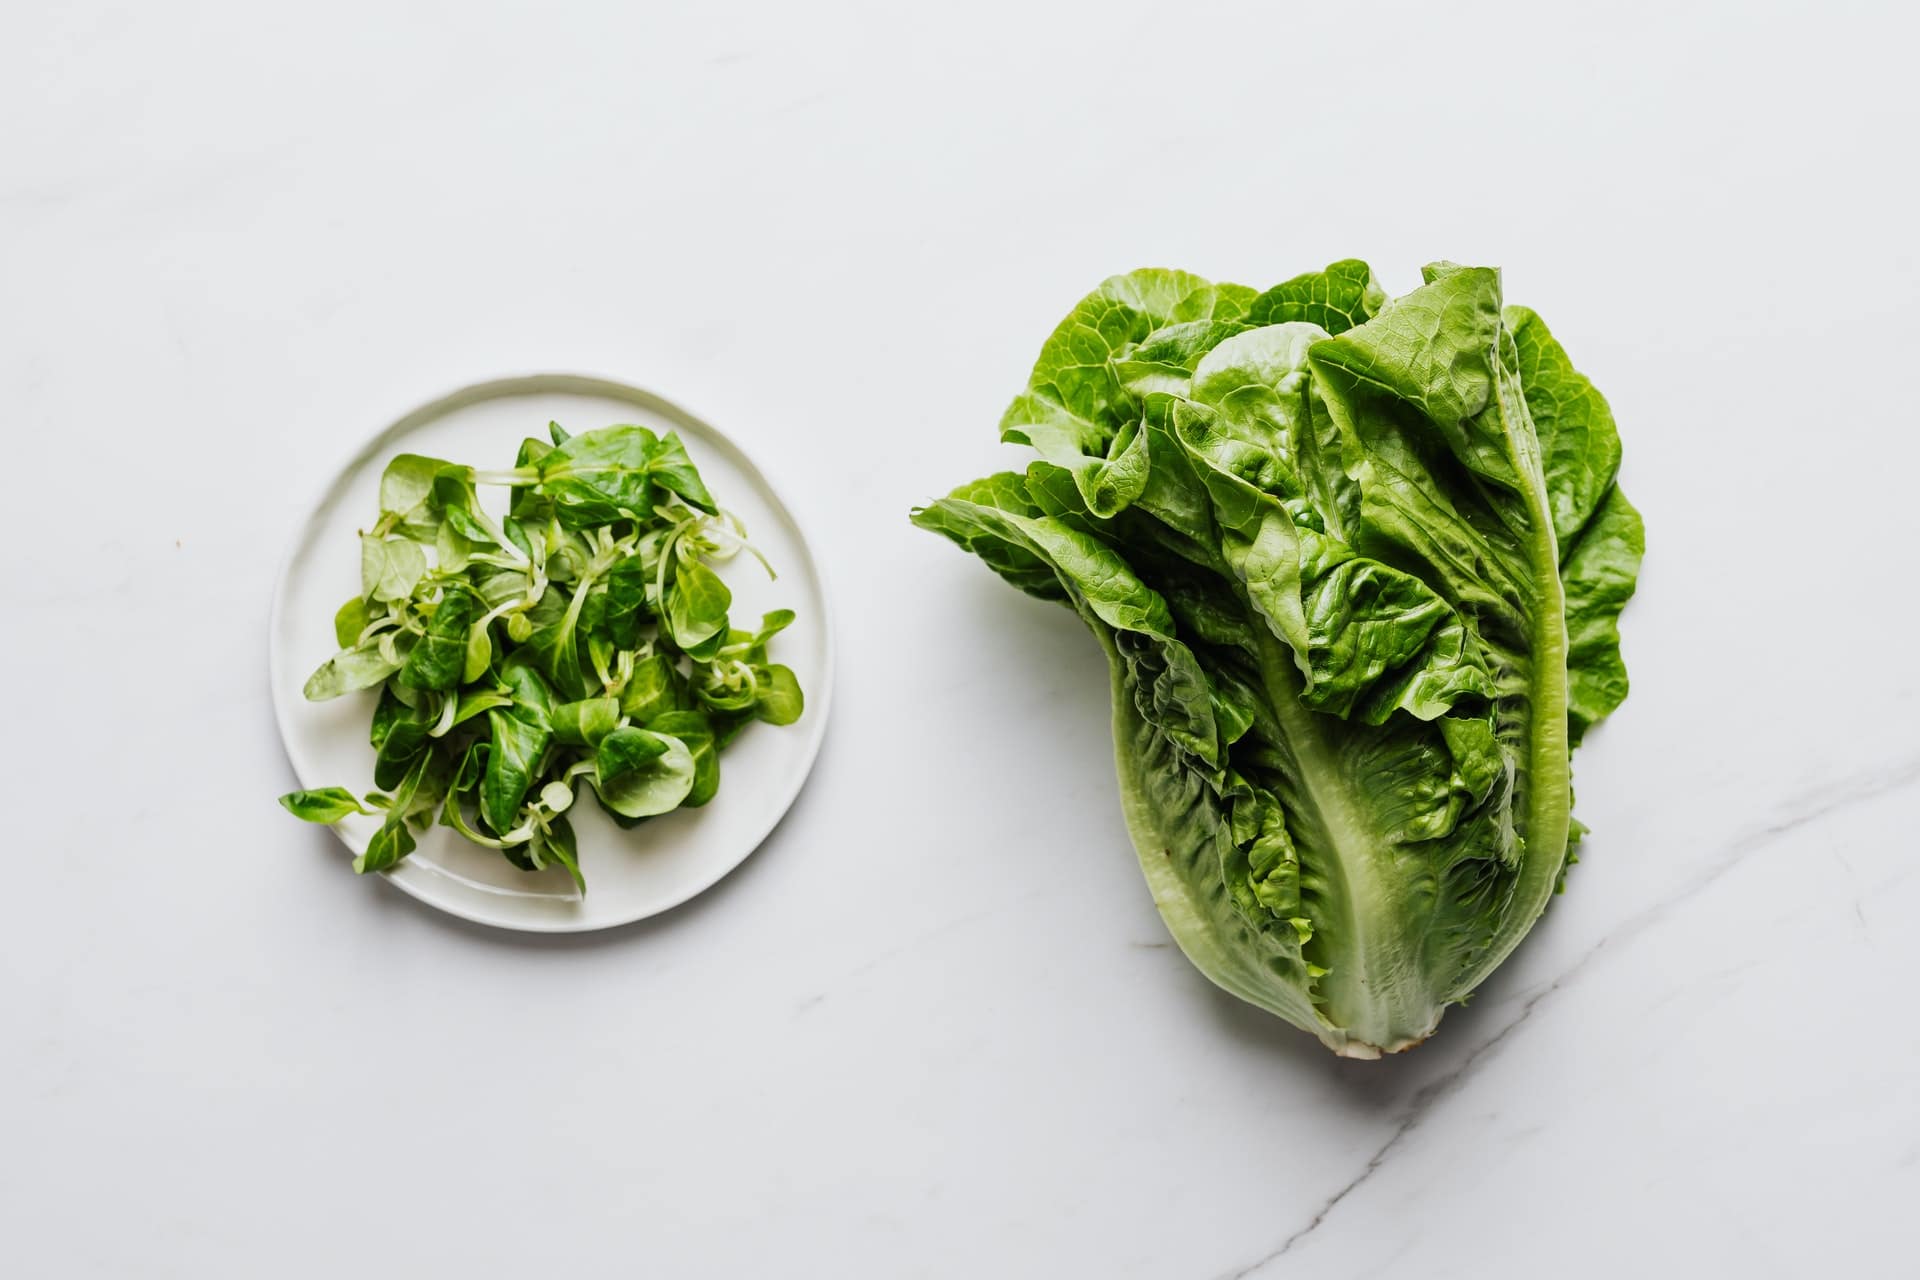 How to grow romaine lettuce